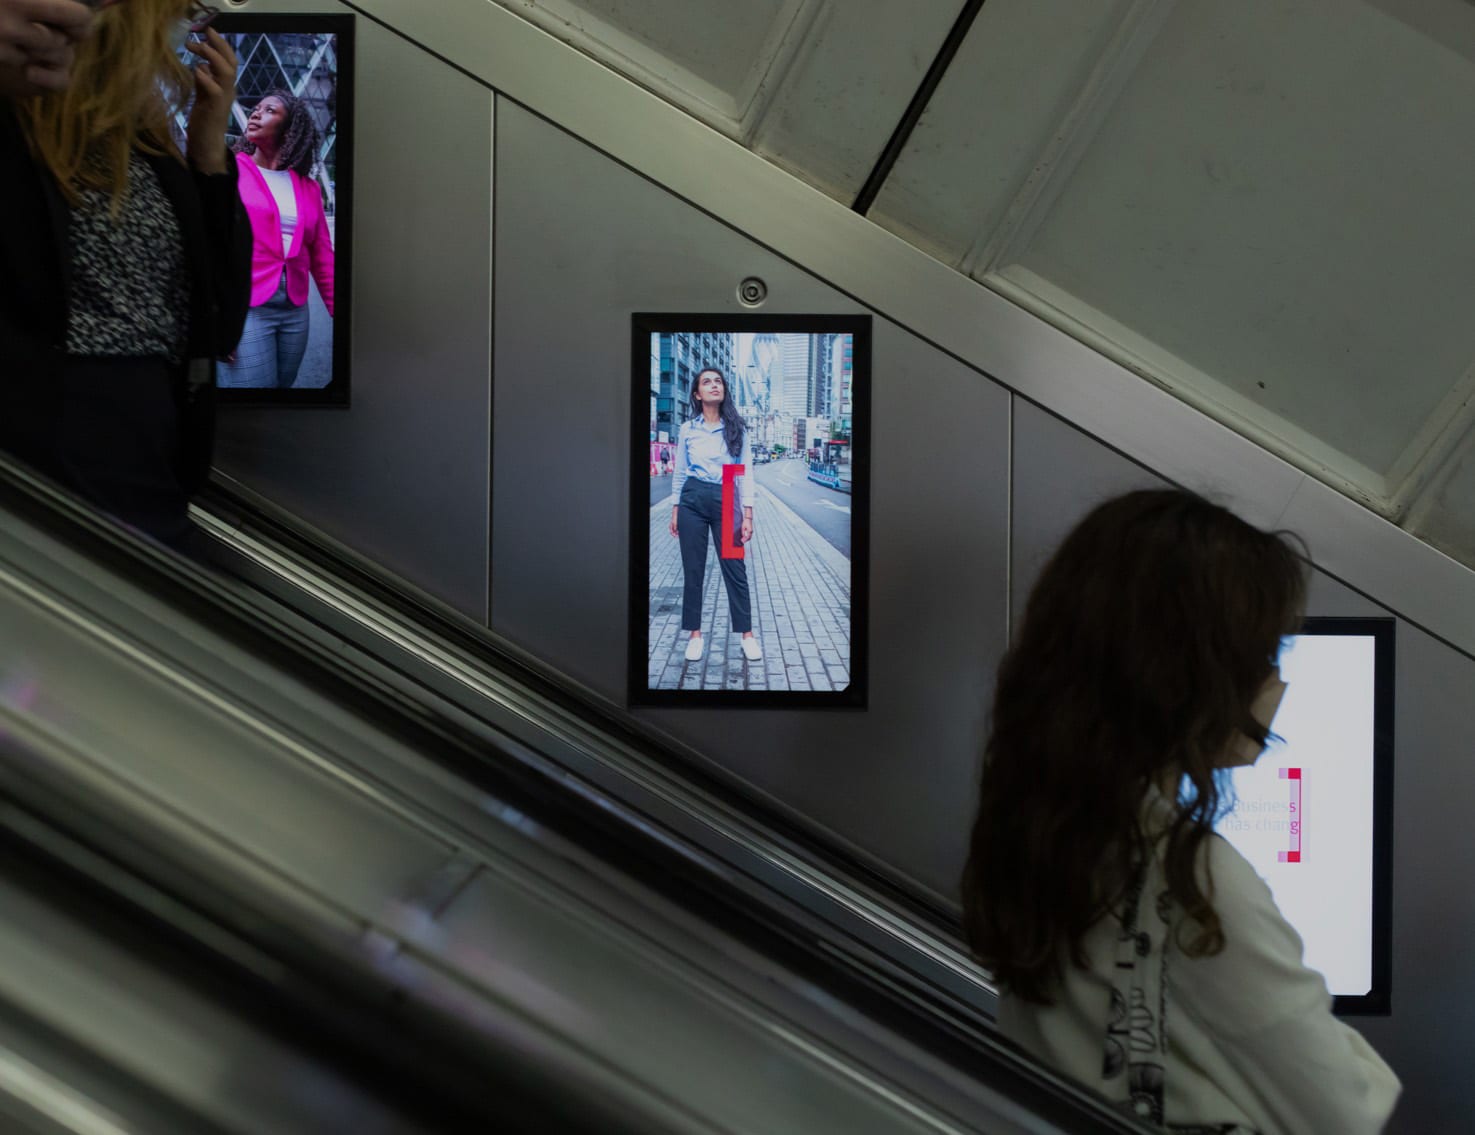 Bayes Business School digital advertising, London Underground escalator